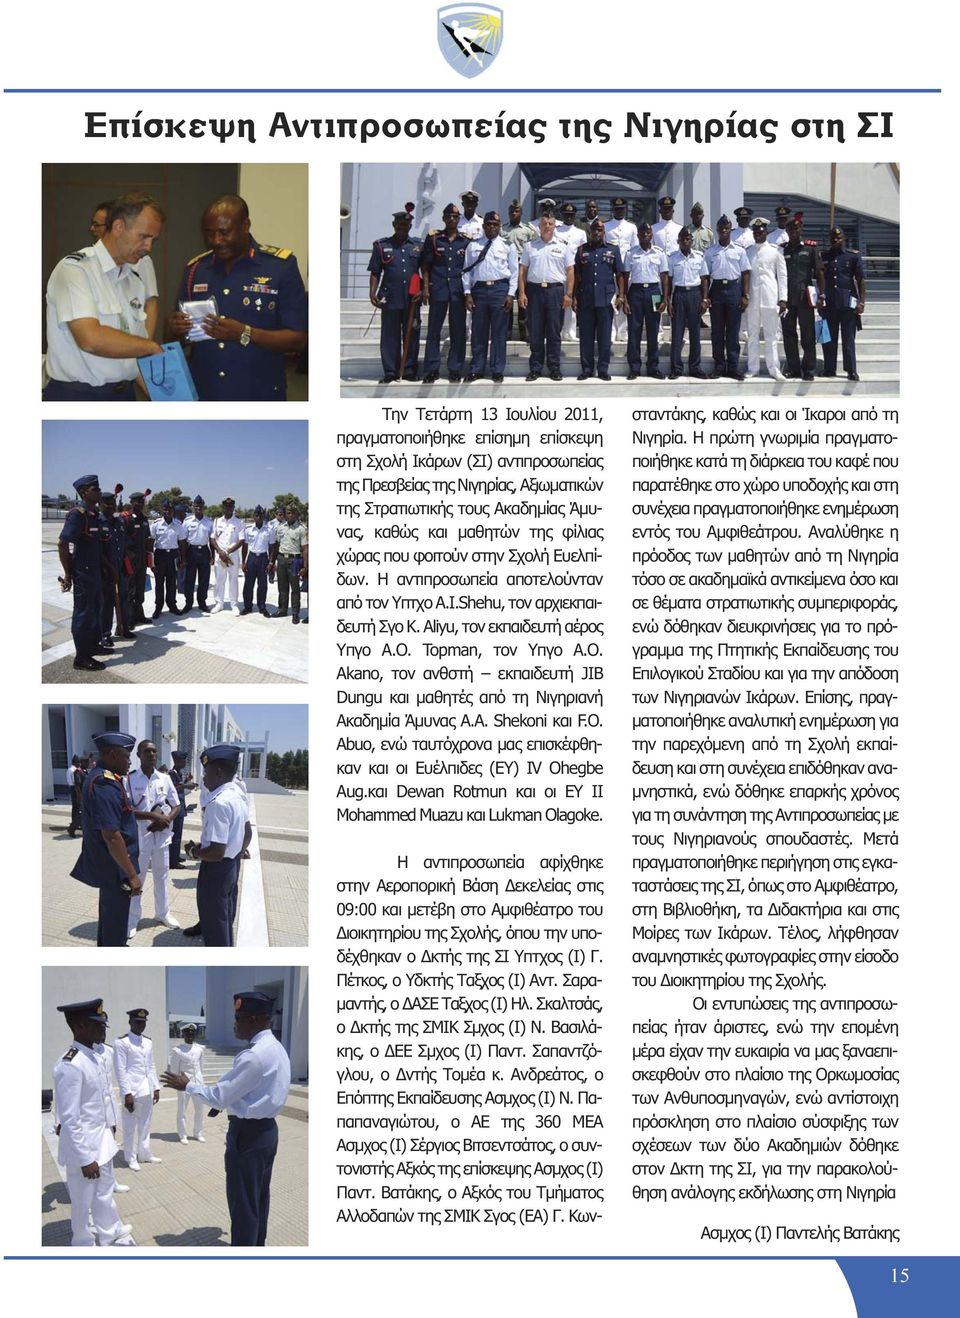 Aliyu, τον εκπαιδευτή αέρος Υπγο A.O. Topman, τον Υπγο A.O. Akano, τον ανθστή εκπαιδευτή JIB Dungu και μαθητές από τη Νιγηριανή Ακαδημία Άμυνας A.A. Shekoni και F.O. Abuo, ενώ ταυτόχρονα μας επισκέφθηκαν και οι Ευέλπιδες (ΕΥ) IV Ohegbe Aug.